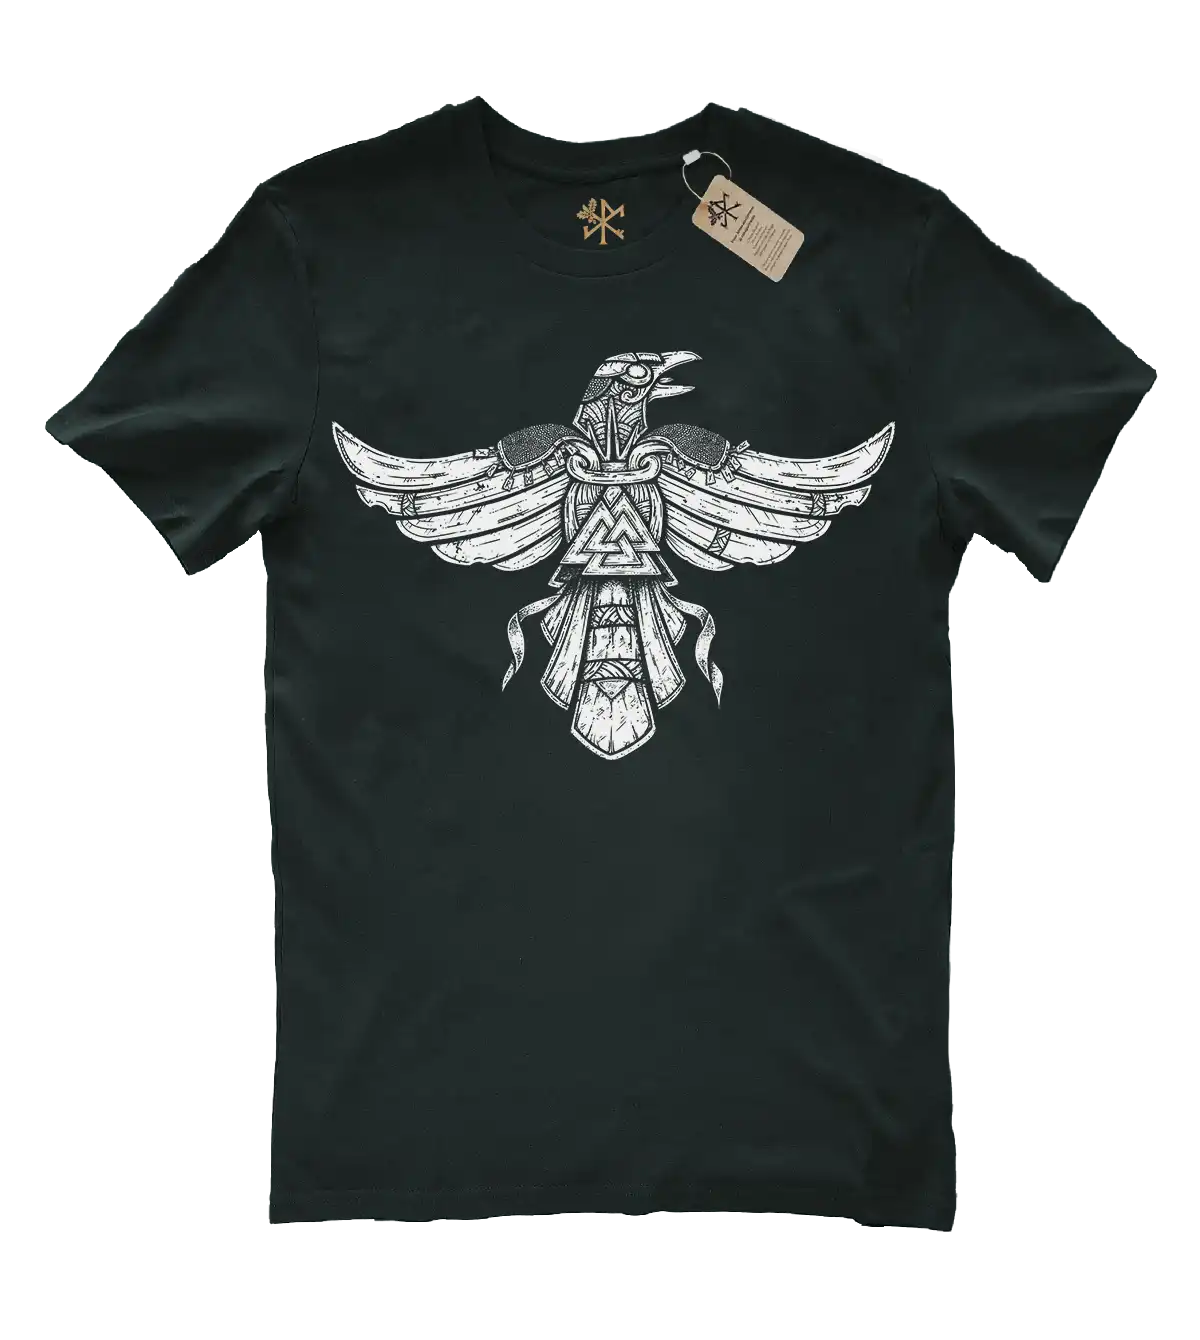 Huginn - t-shirt corbeau viking